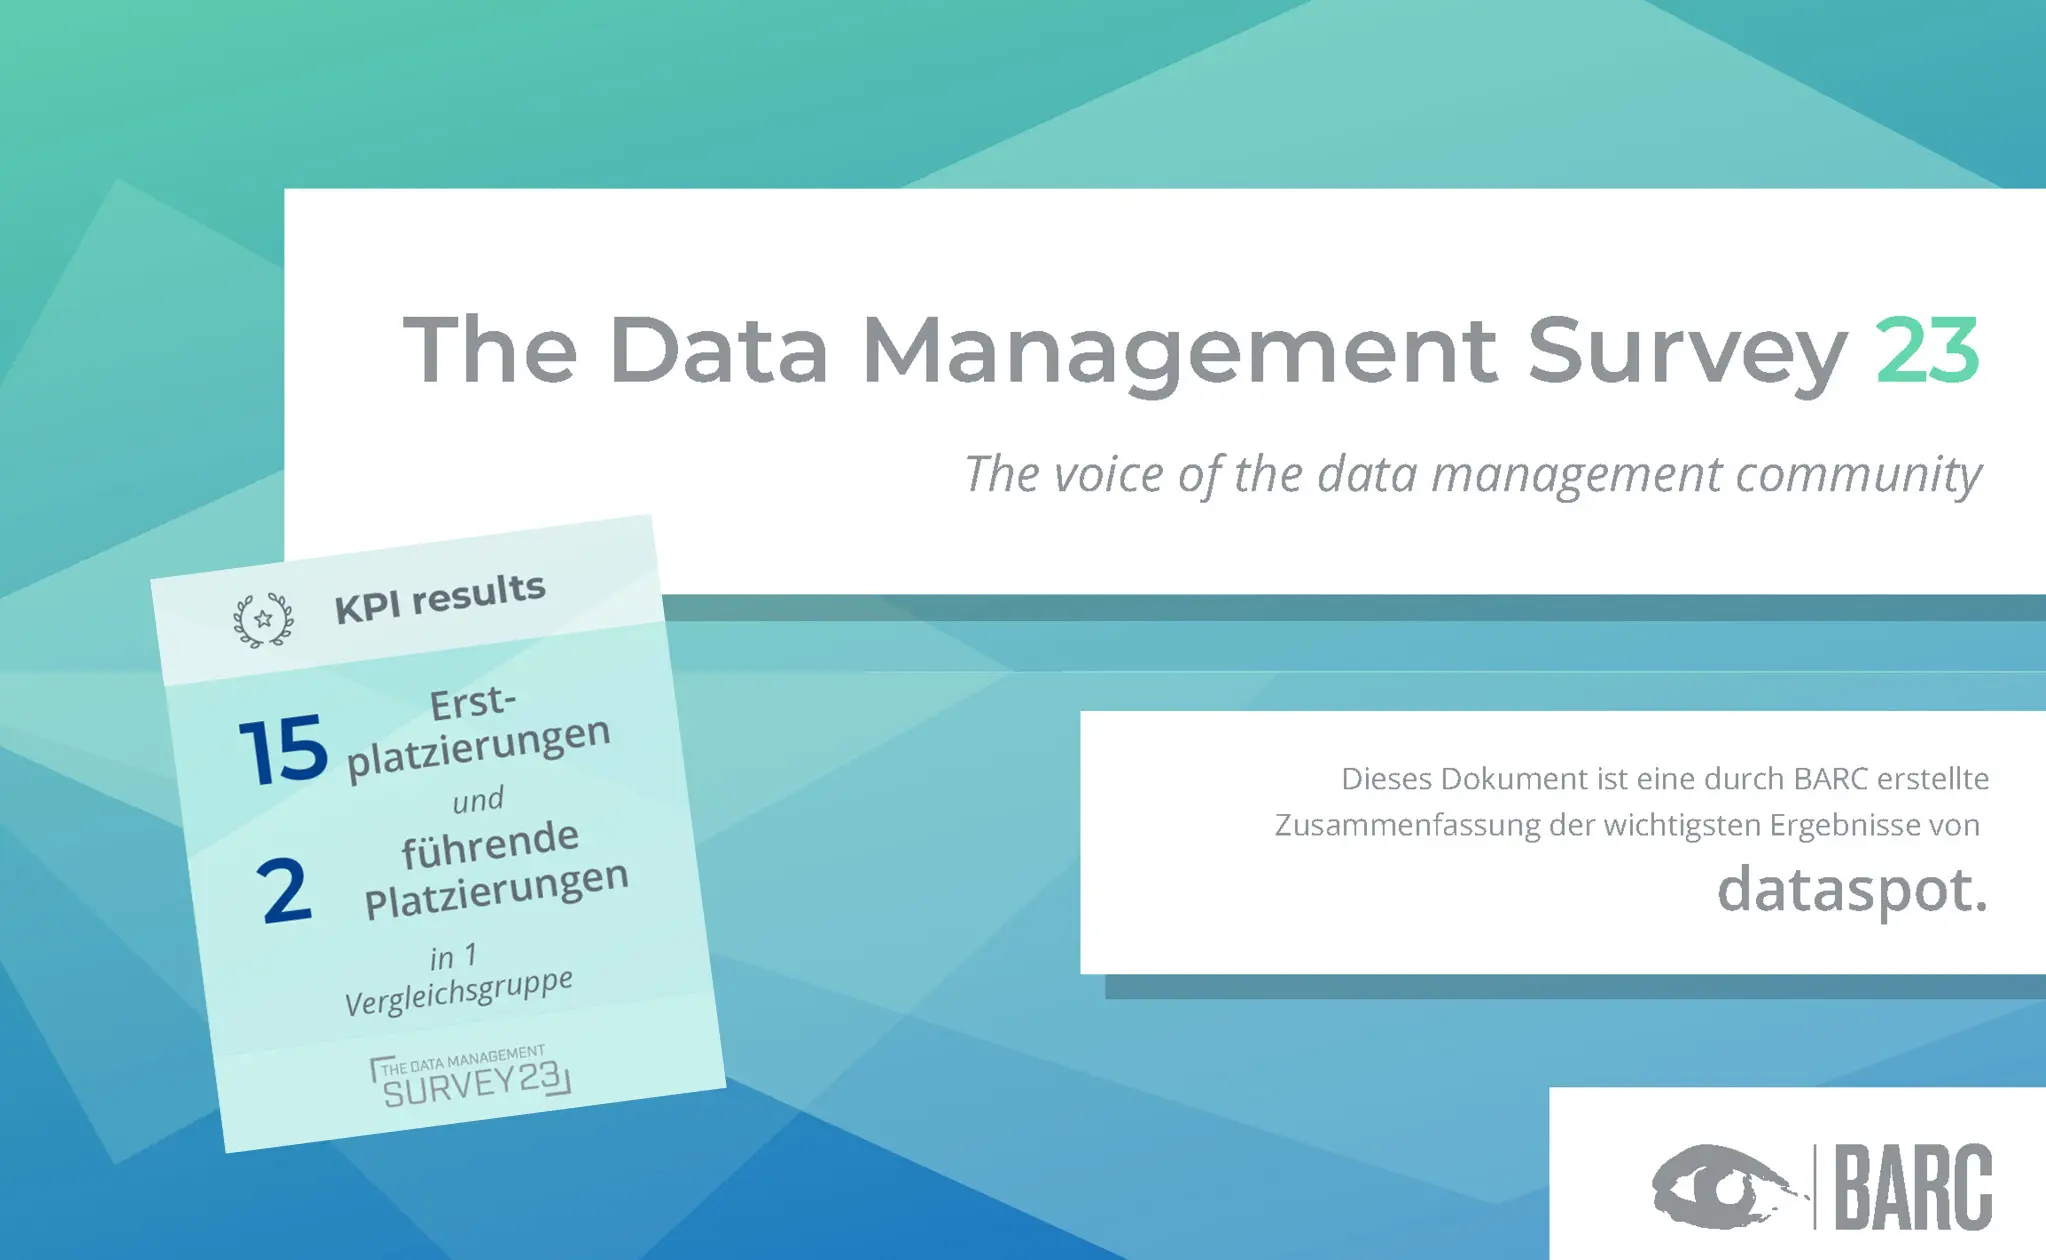 dataspot. BARC Data Management Survey 23, Top-Data Governance Tool, #1, Data Catalog, Metdattenmanagement Software